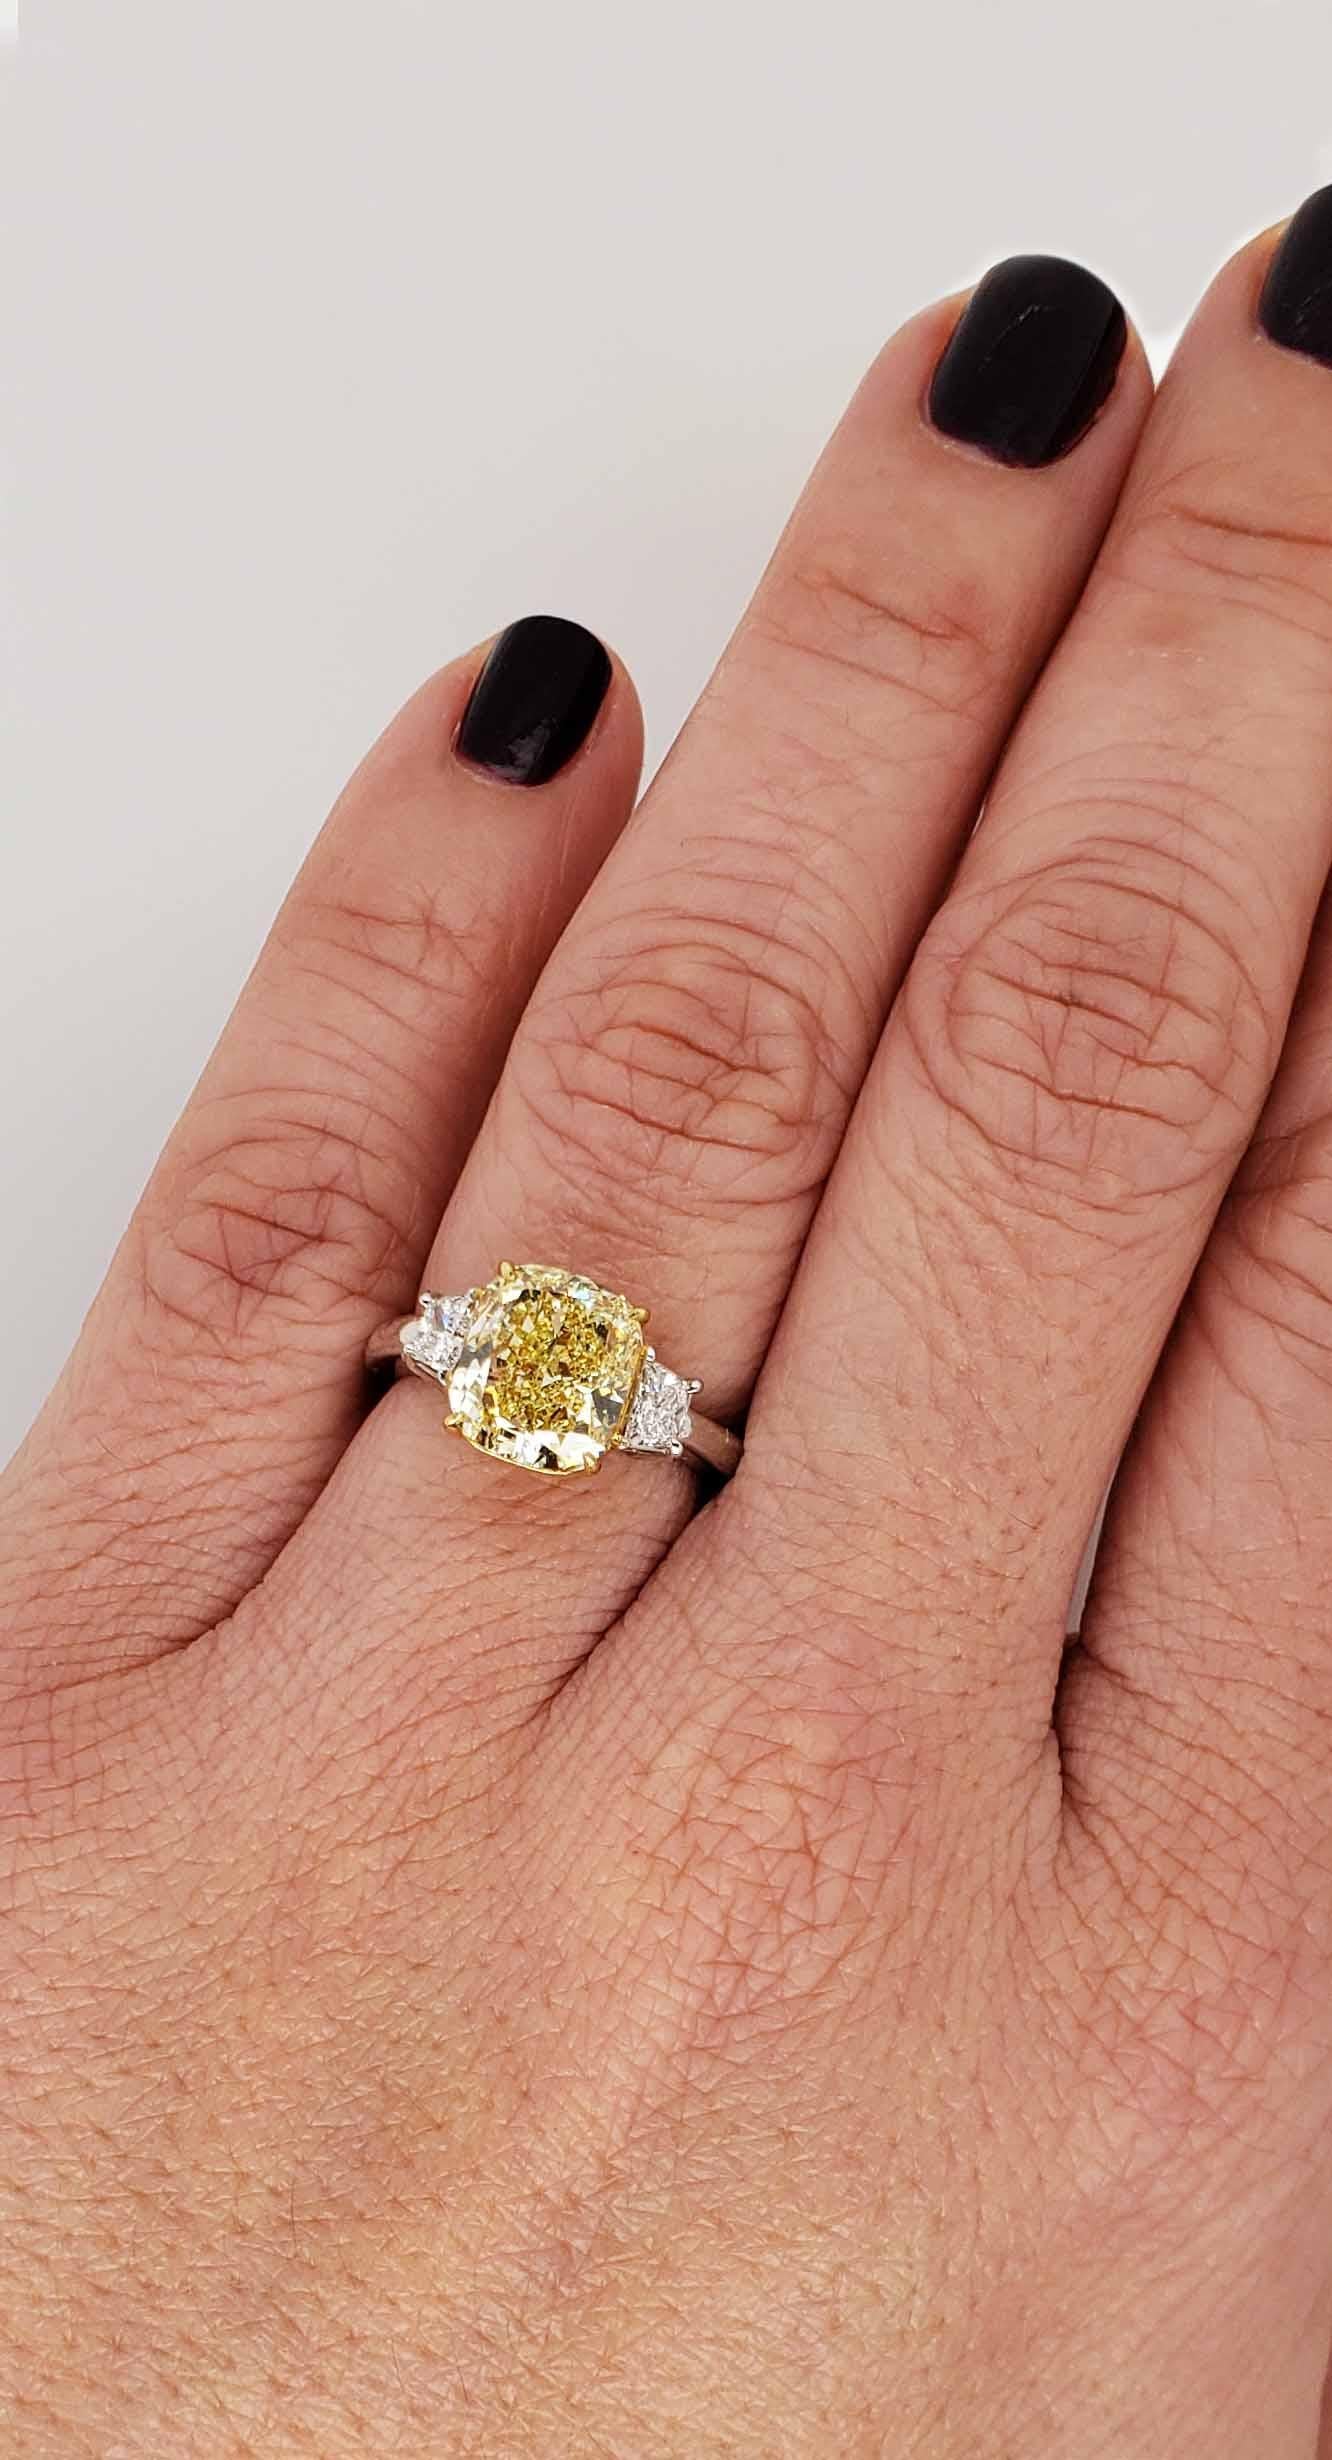 Women's Scarselli 3.80 carat Fancy Intense Yellow Cushion Cut Diamond Engagement Ring 